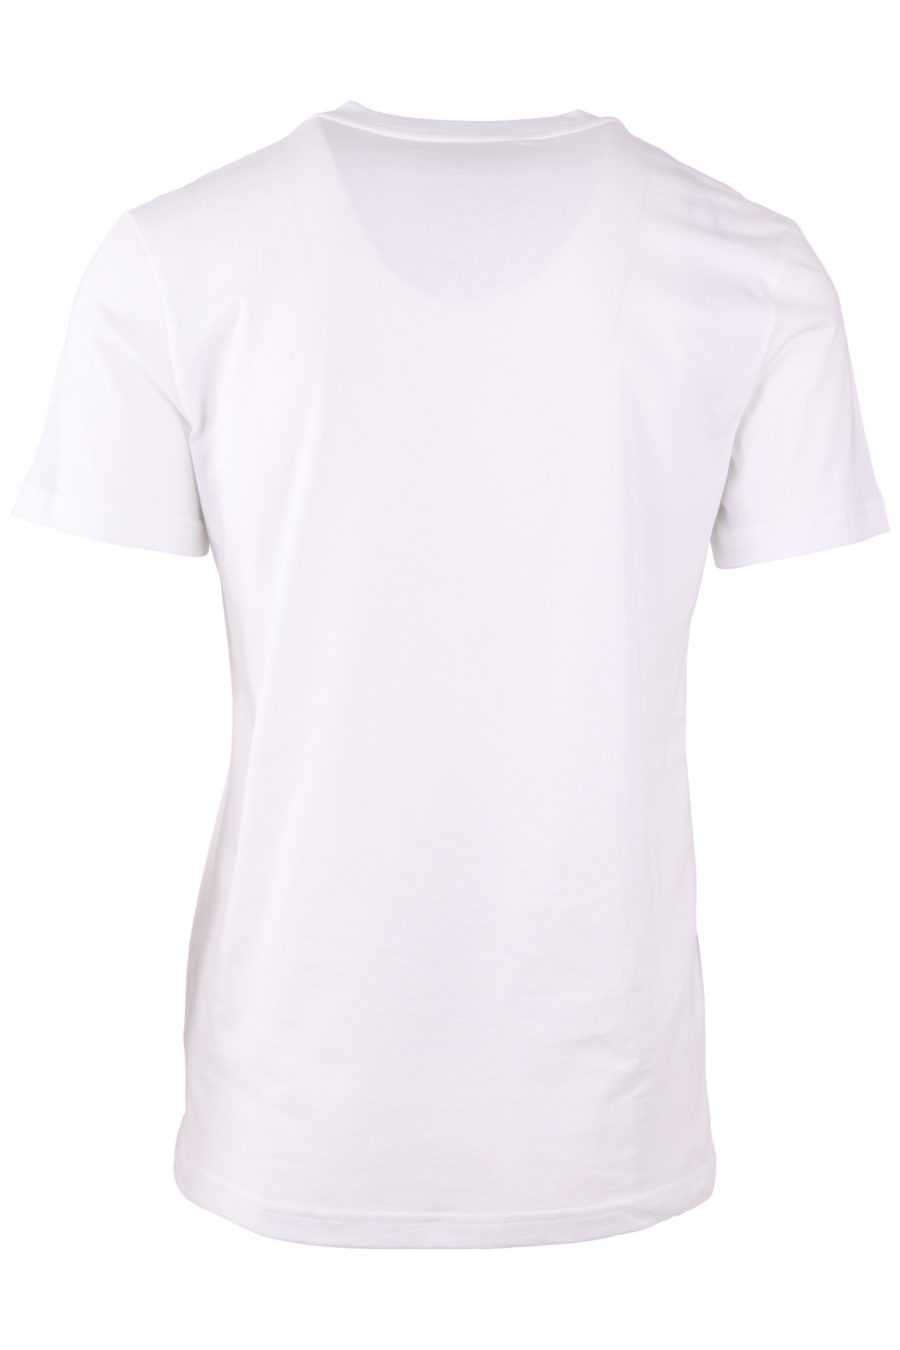 Moschino Couture weißes T-Shirt mit schwarzem Logo vorne - 6e37436b62b71f0f53f23acc2fcd64db50b226fb